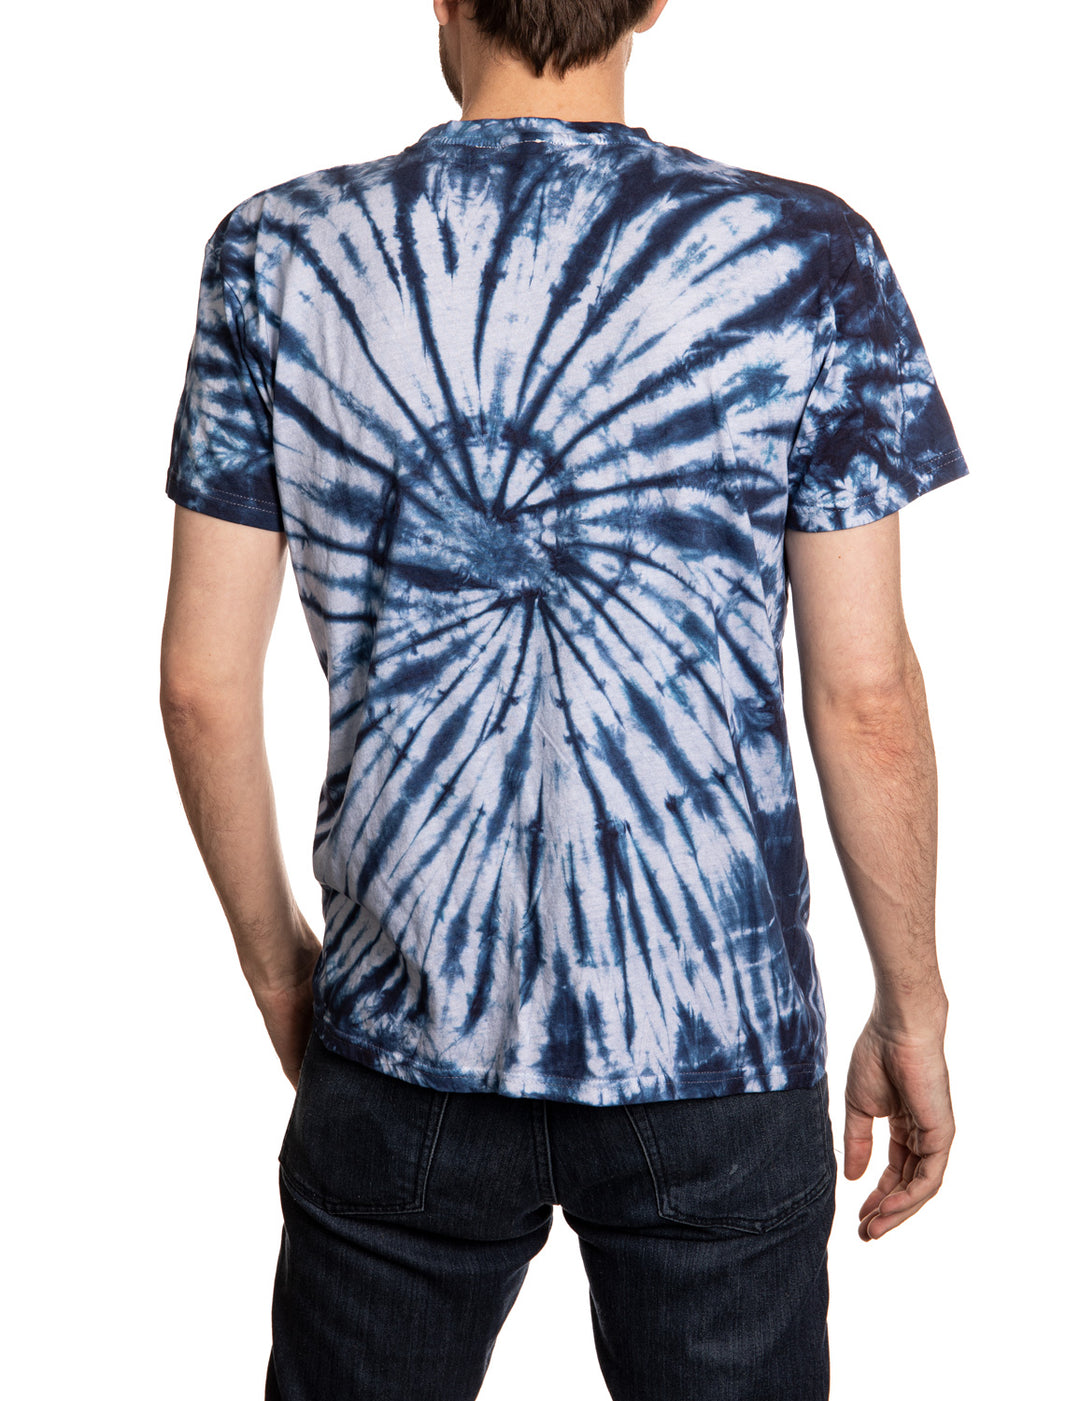 Seattle Kraken Spiral Tie Dye T-Shirt